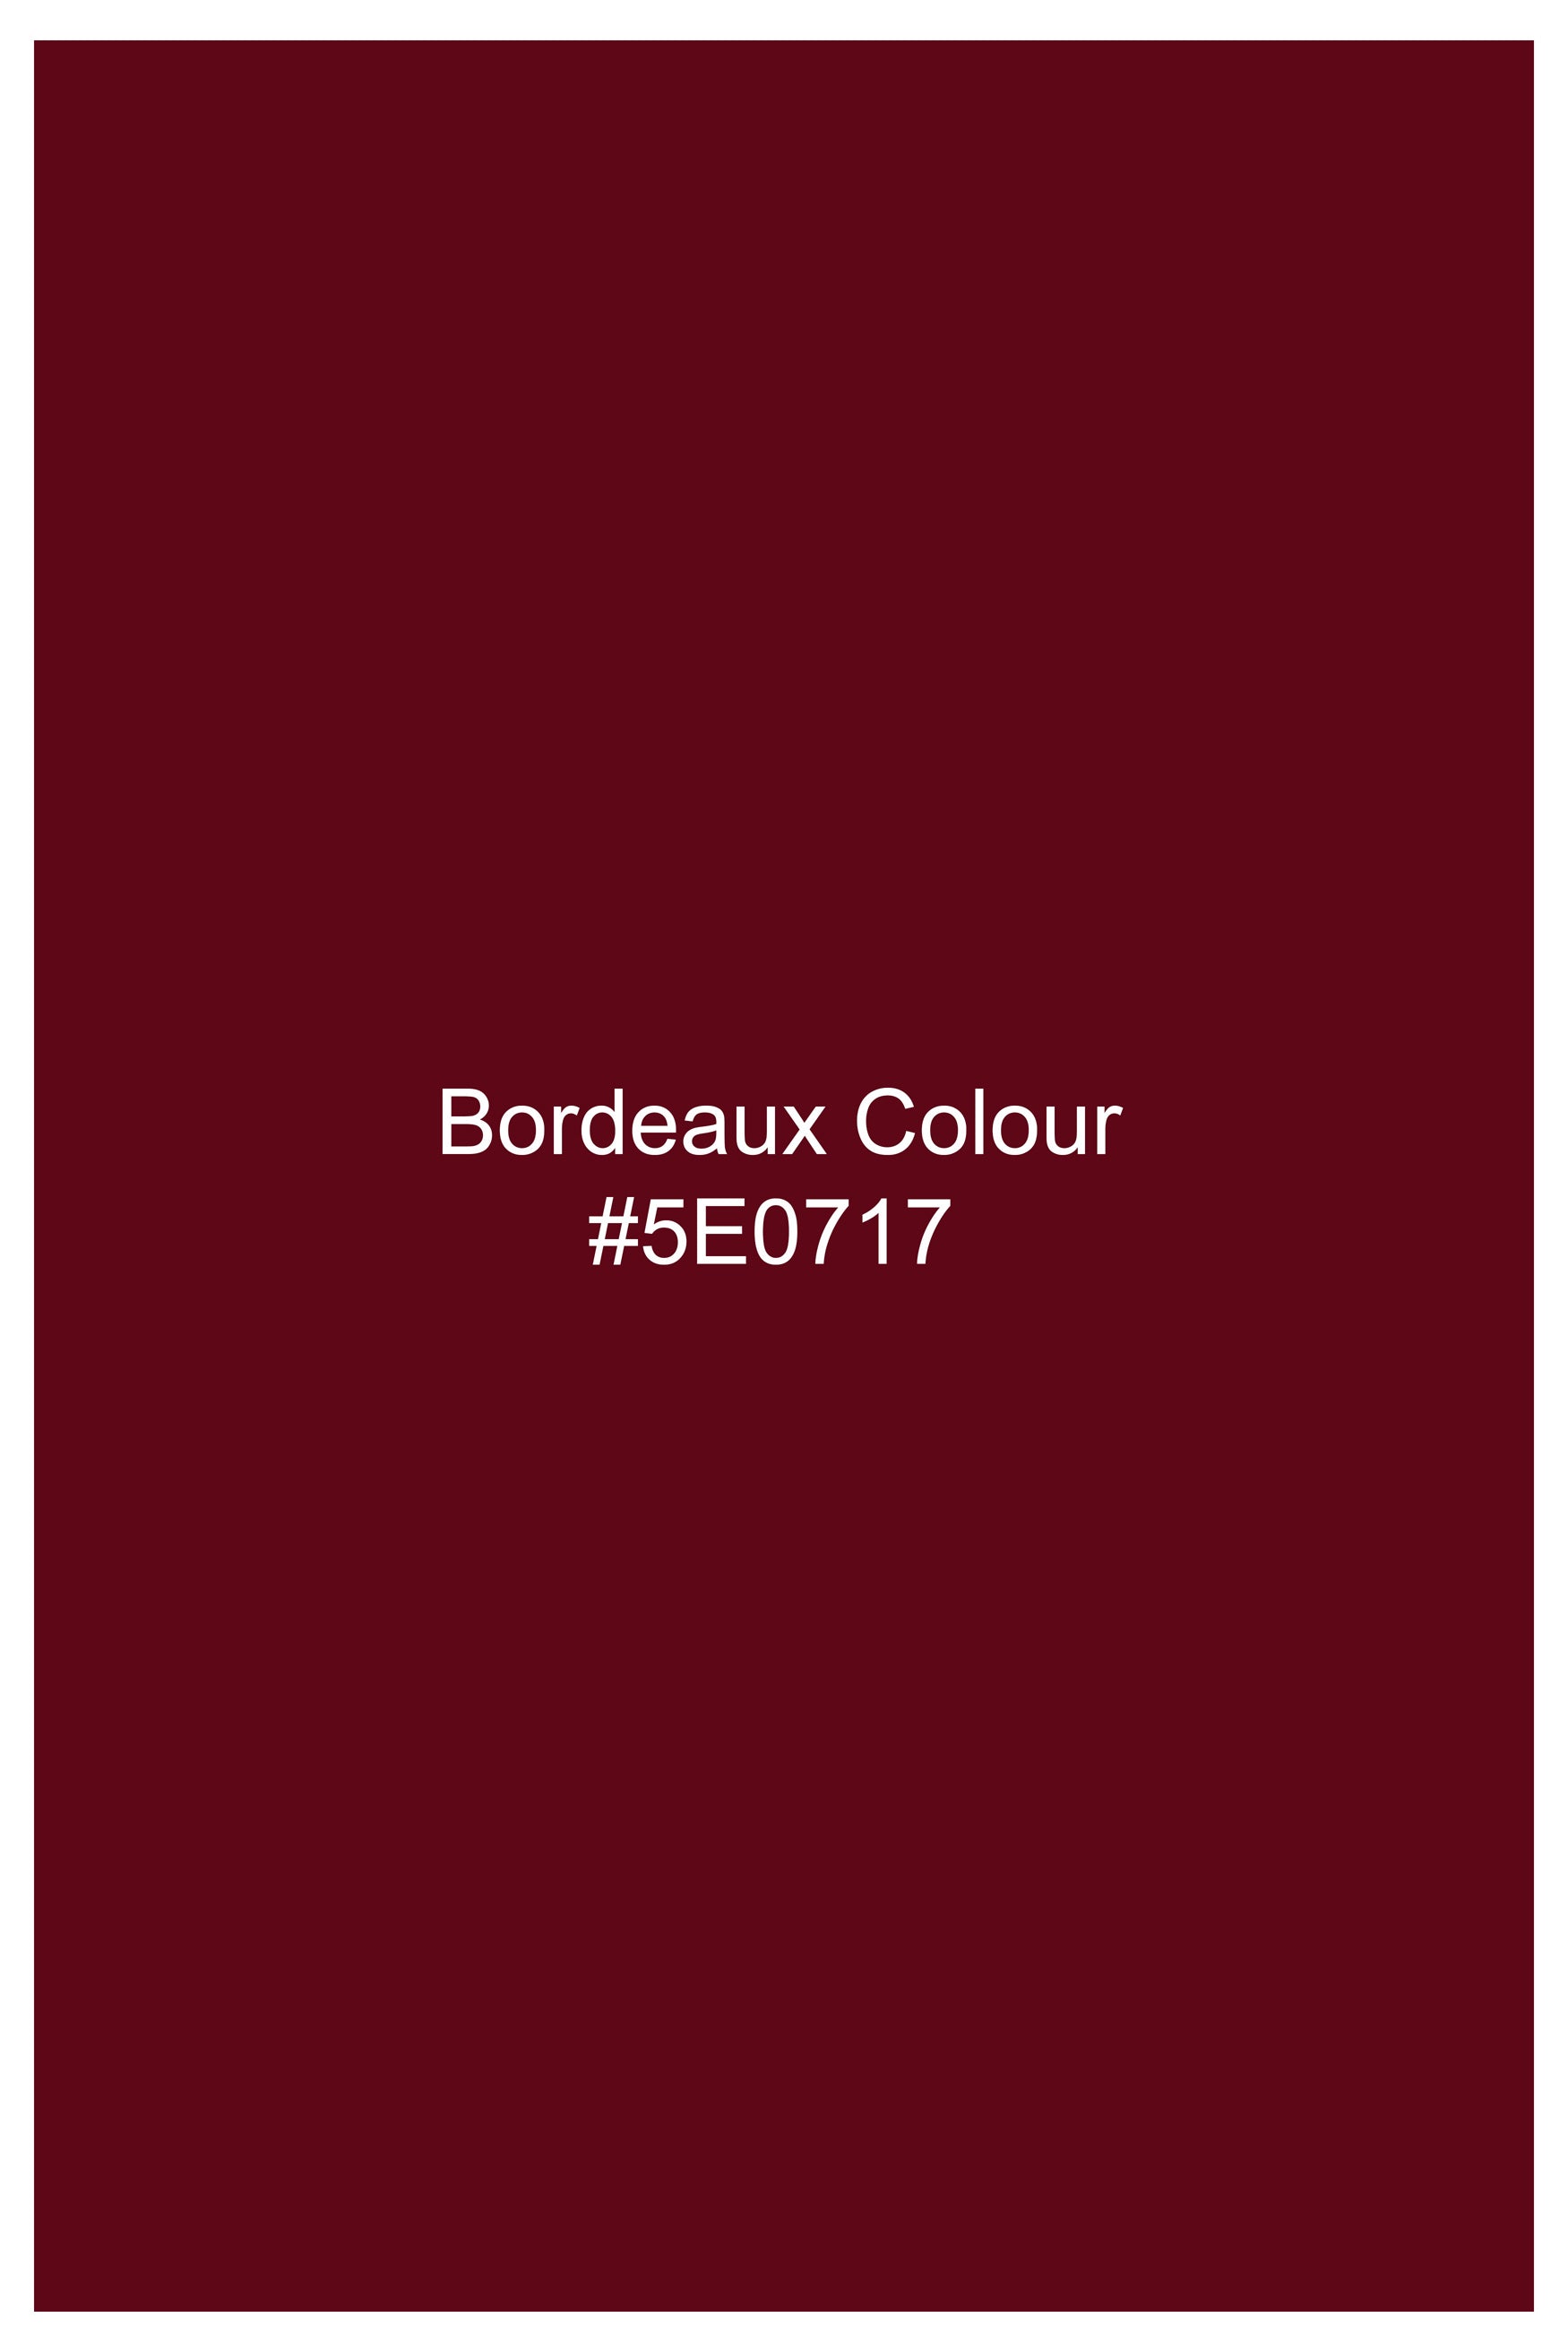 Bordeaux Red with Black Cuffs and Collar Subtle Sheen Super Soft Premium Cotton Shirt 11743-M-BCC-BLK-38, 11743-M-BCC-BLK-H-38, 11743-M-BCC-BLK-39, 11743-M-BCC-BLK-H-39, 11743-M-BCC-BLK-40, 11743-M-BCC-BLK-H-40, 11743-M-BCC-BLK-42, 11743-M-BCC-BLK-H-42, 11743-M-BCC-BLK-44, 11743-M-BCC-BLK-H-44, 11743-M-BCC-BLK-46, 11743-M-BCC-BLK-H-46, 11743-M-BCC-BLK-48, 11743-M-BCC-BLK-H-48, 11743-M-BCC-BLK-50, 11743-M-BCC-BLK-H-50, 11743-M-BCC-BLK-52, 11743-M-BCC-BLK-H-52